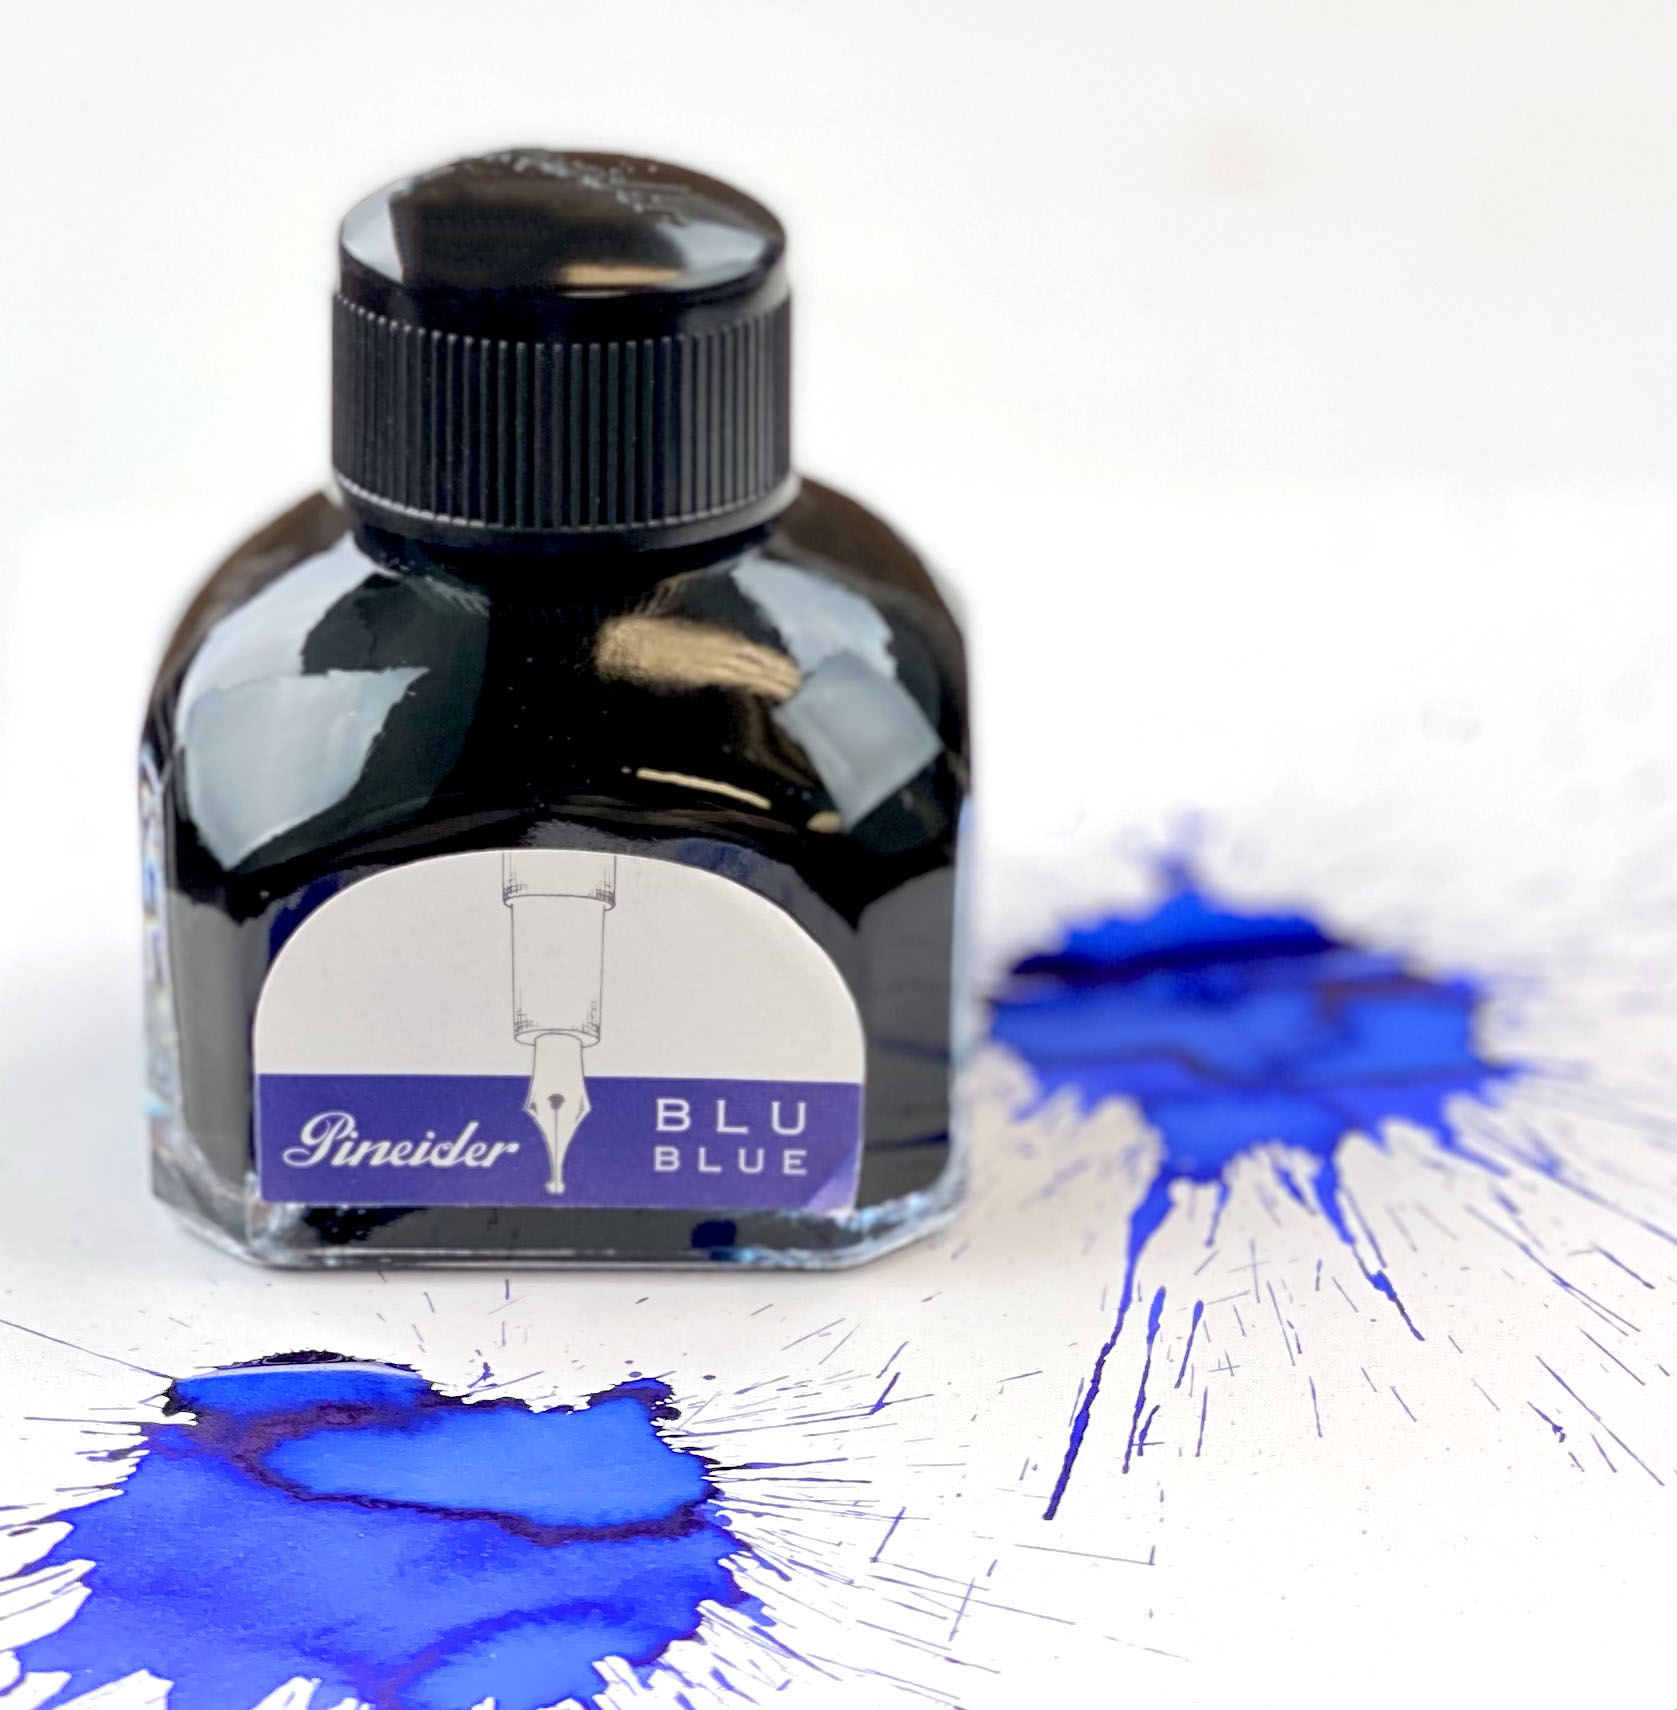 Pen Chalet Ink Review & Giveaway: Krishna Lyrebird Waterproof Blue-Black Ink  - Pen Chalet